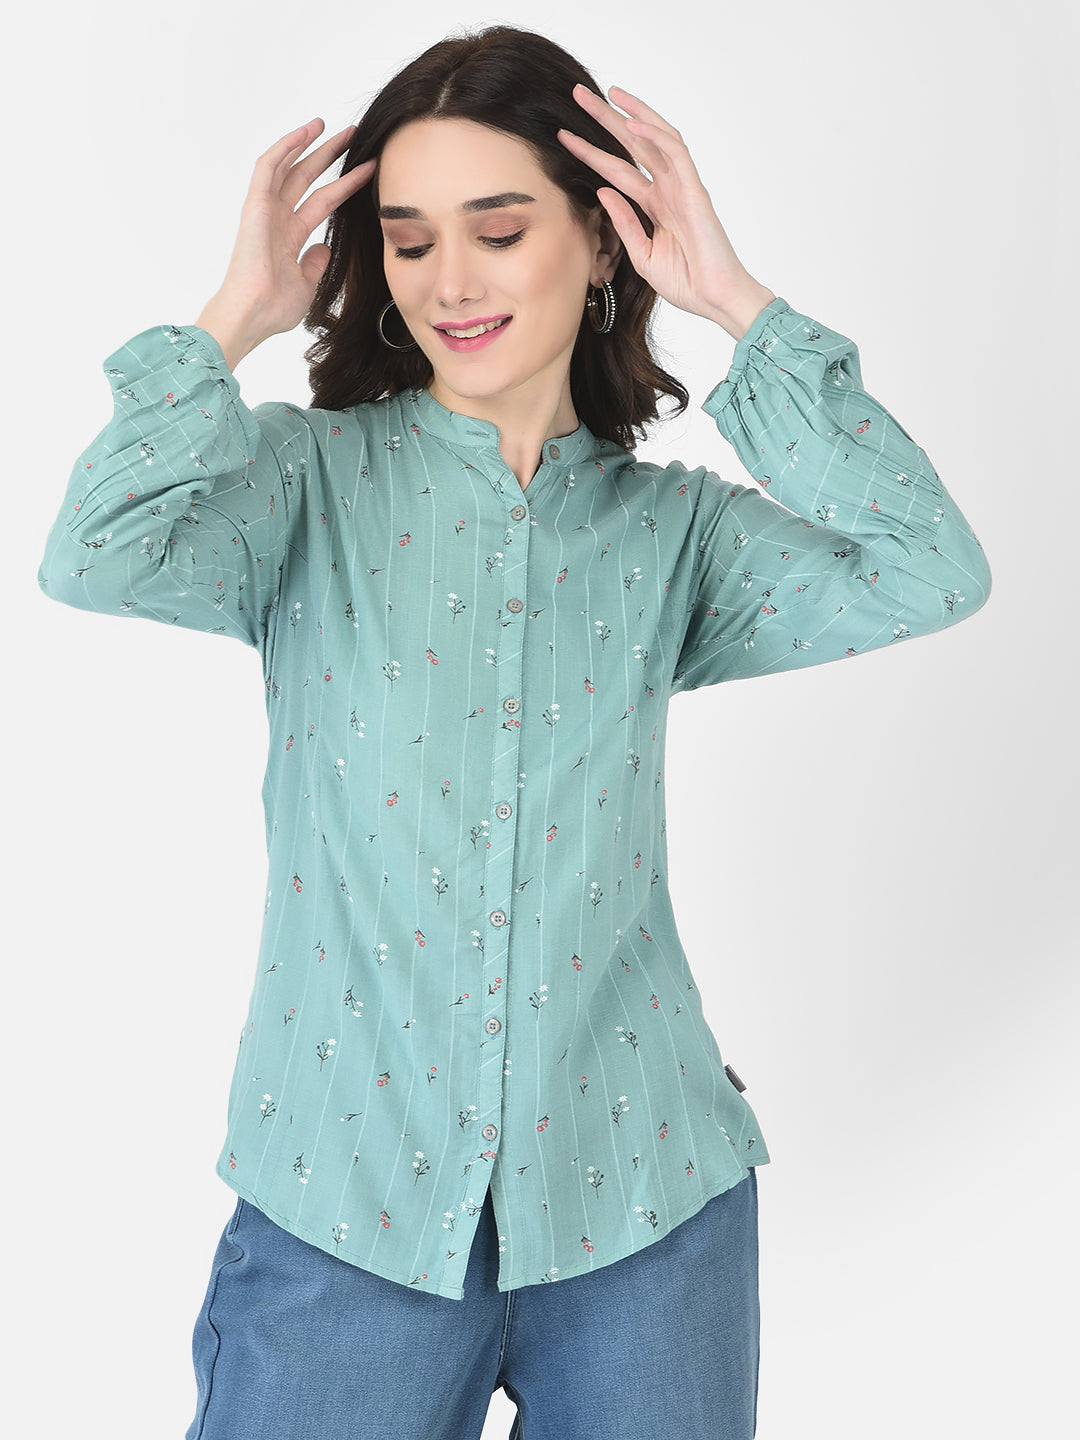 Seafoam Green Floral Shirt - Women Shirts